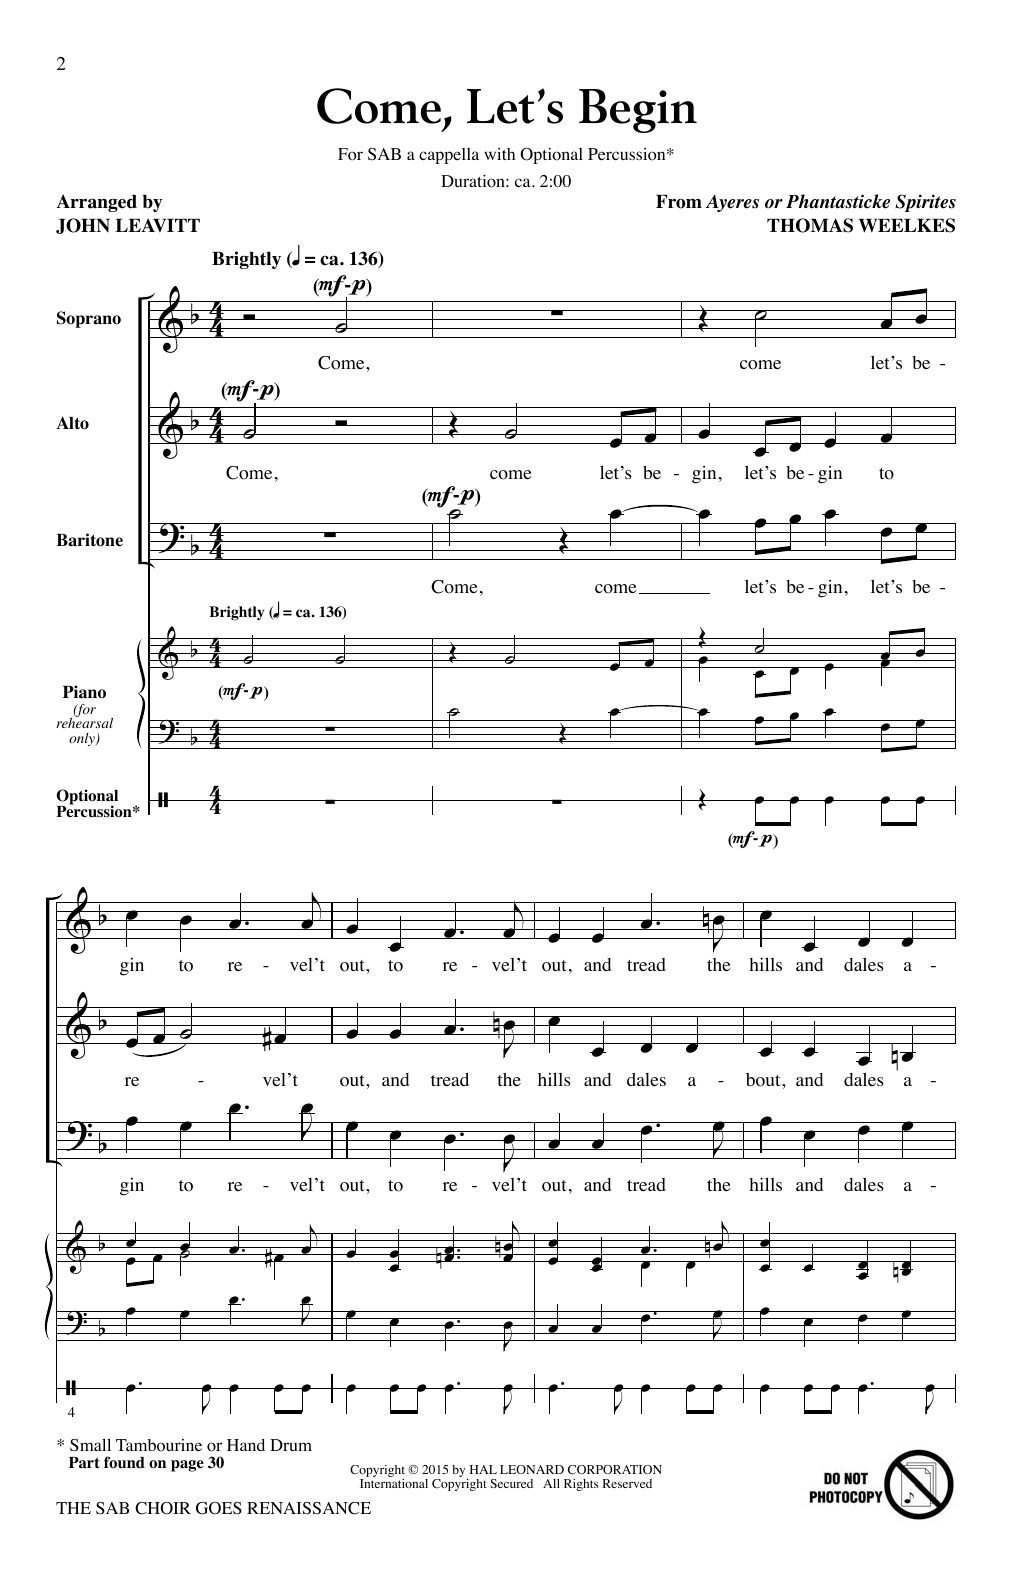 Download John Leavitt The SAB Choir Goes Renaissance Sheet Music and learn how to play SAB PDF digital score in minutes